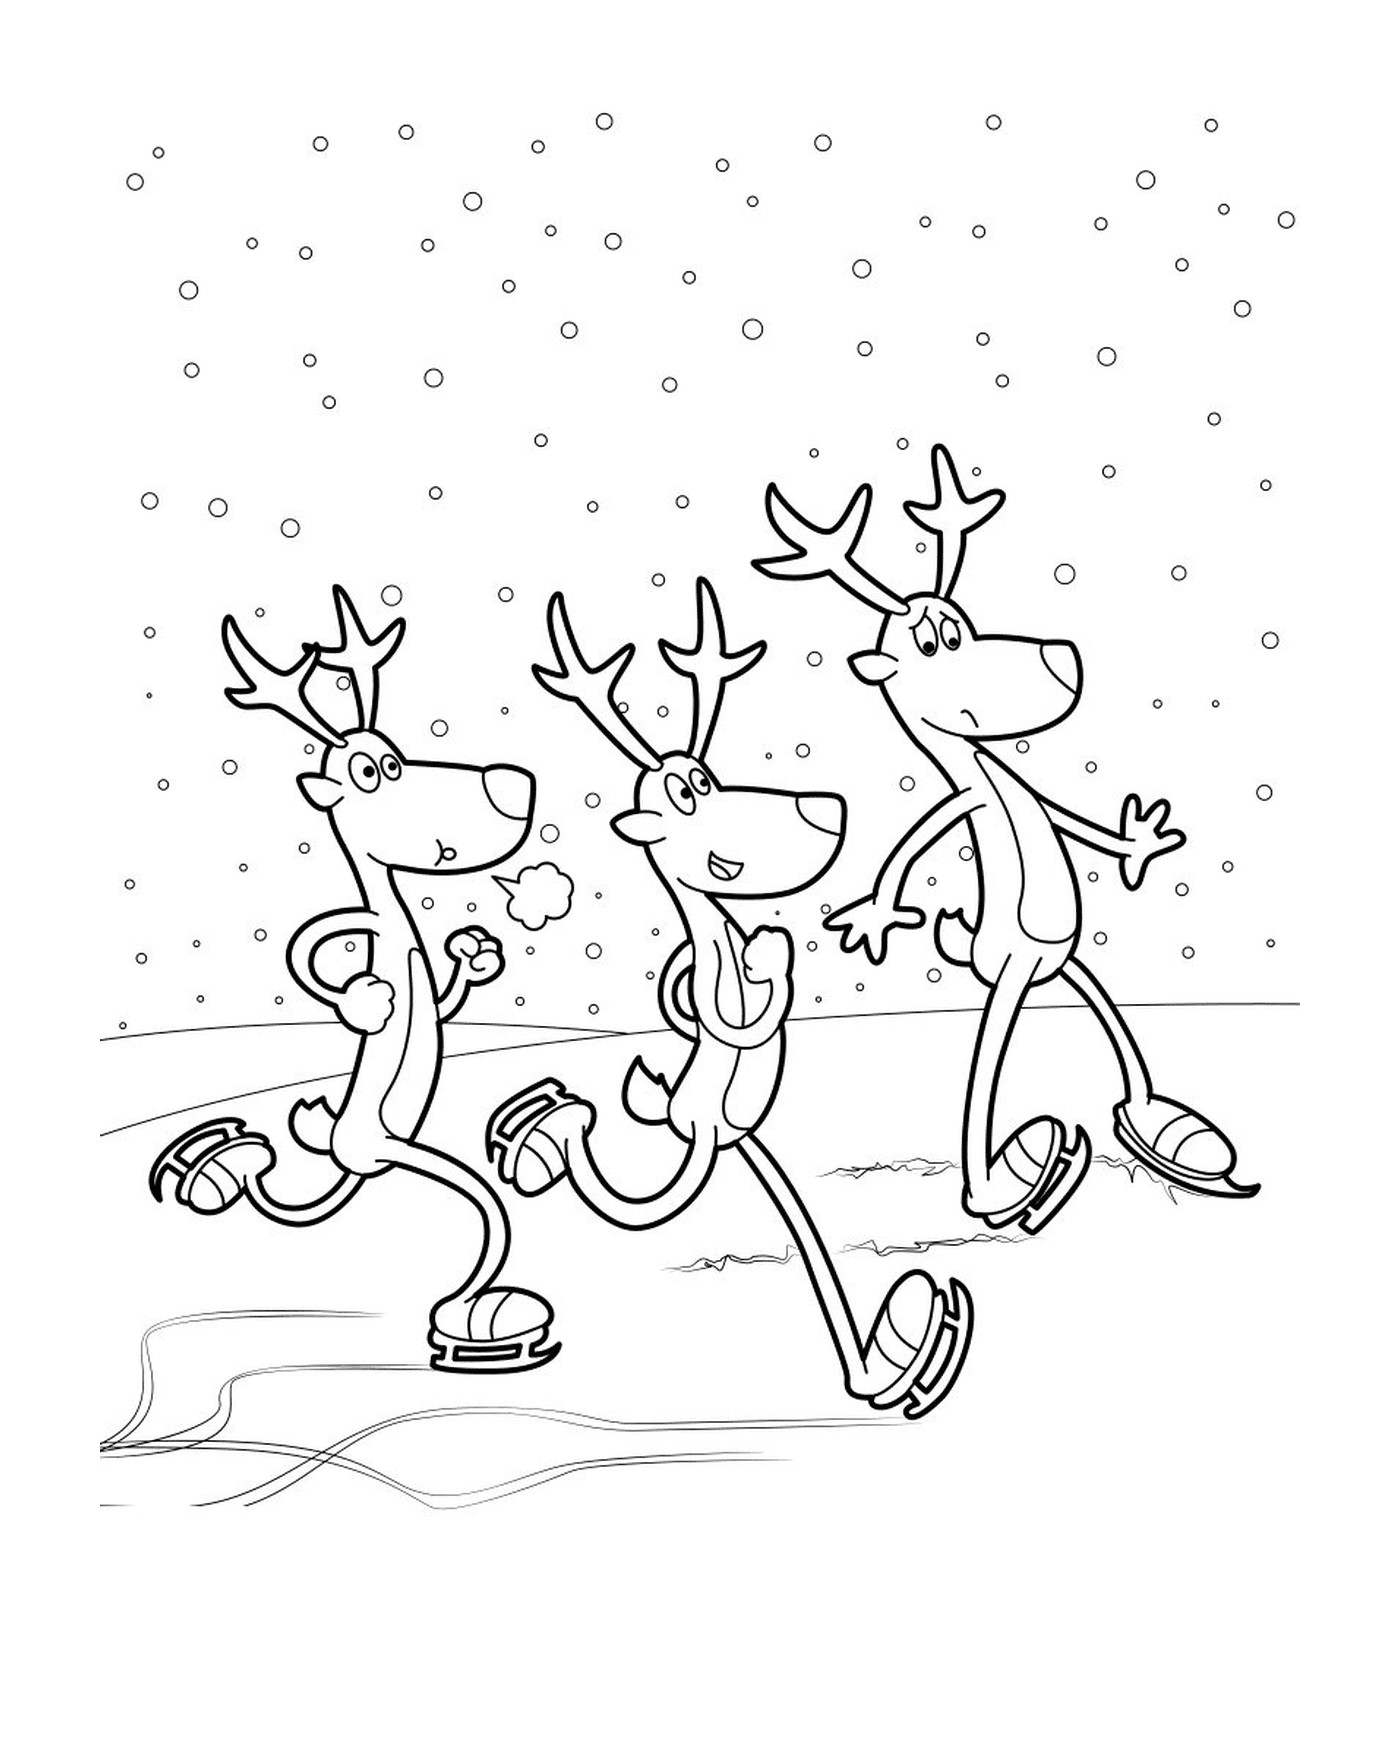  Three Christmas reindeer, Dancer, Fringant, Comet 